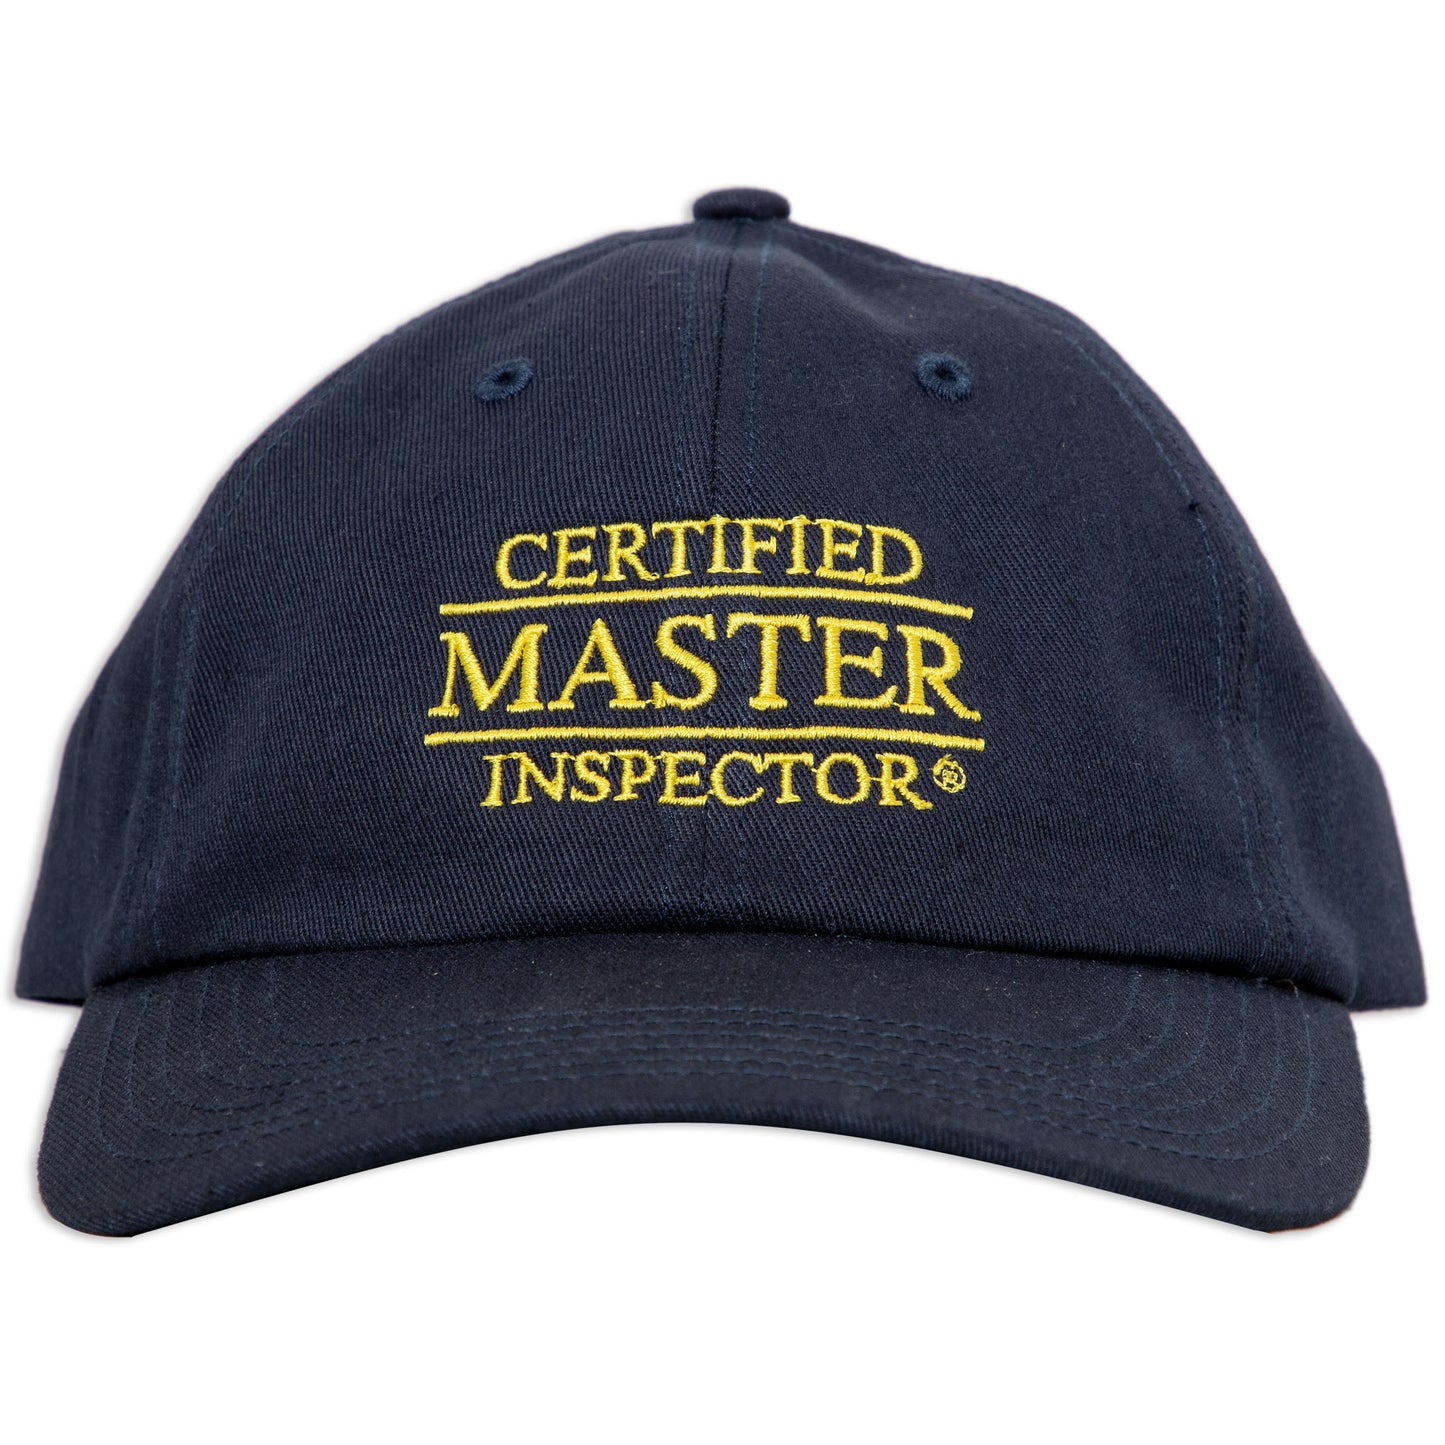 Free Certified Master Inspector® Bump Cap